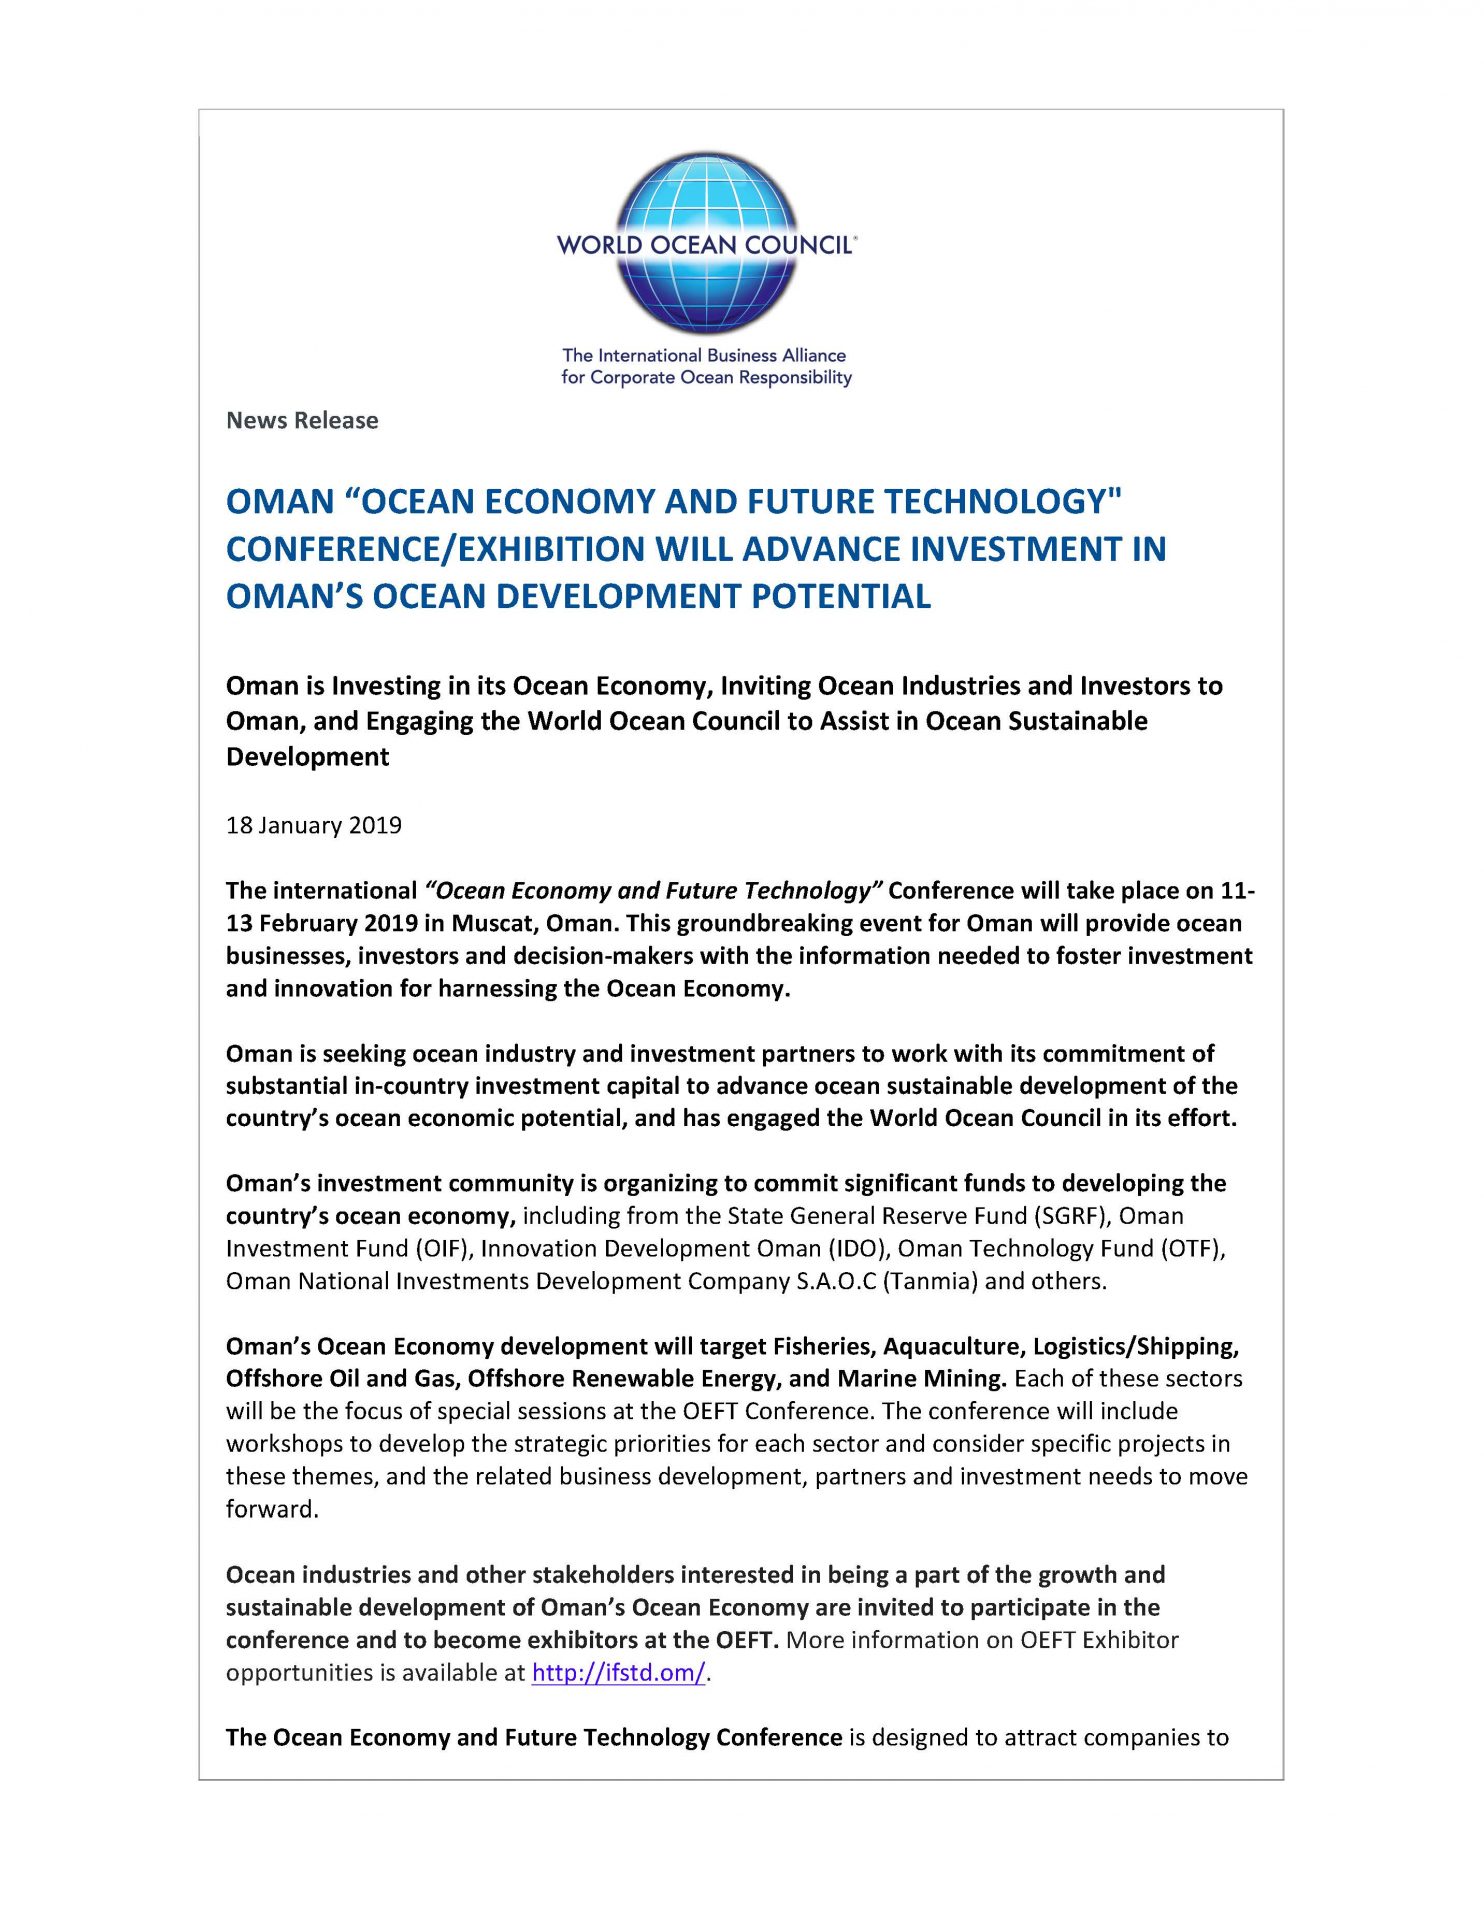 Oman Ocean Economy Conference 11-13 Feb 2019 - 18 January 2019